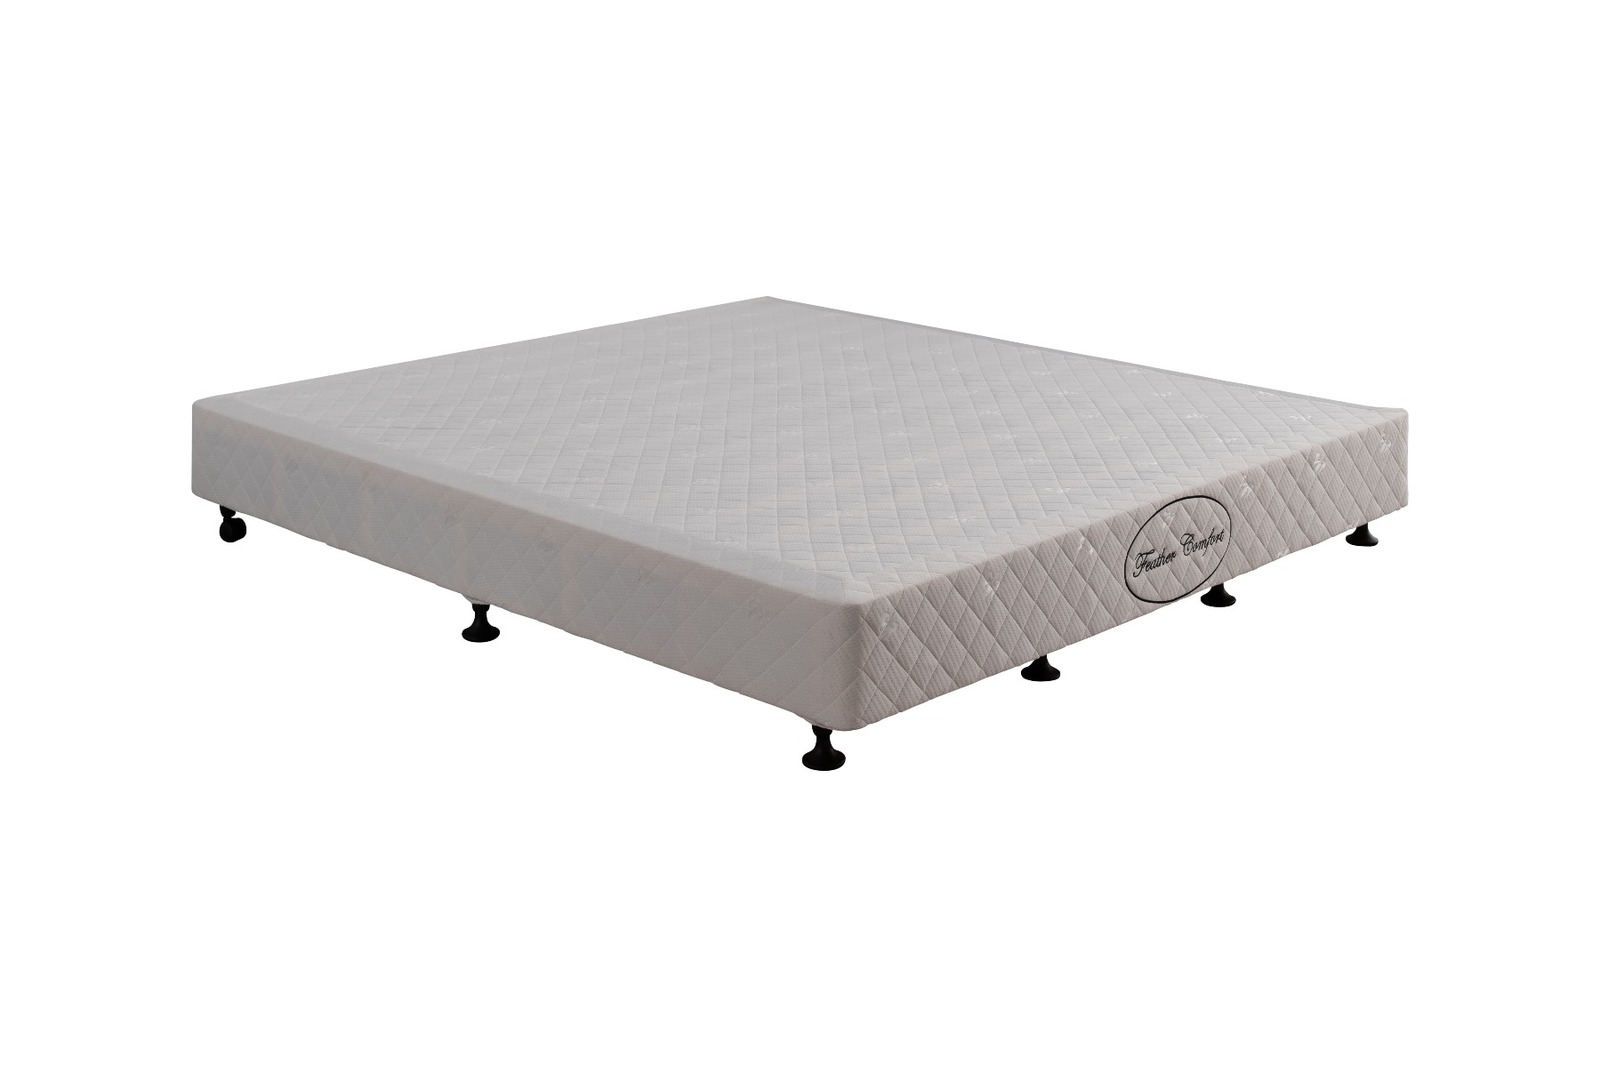 base for queen size mattress in jacksonville fl